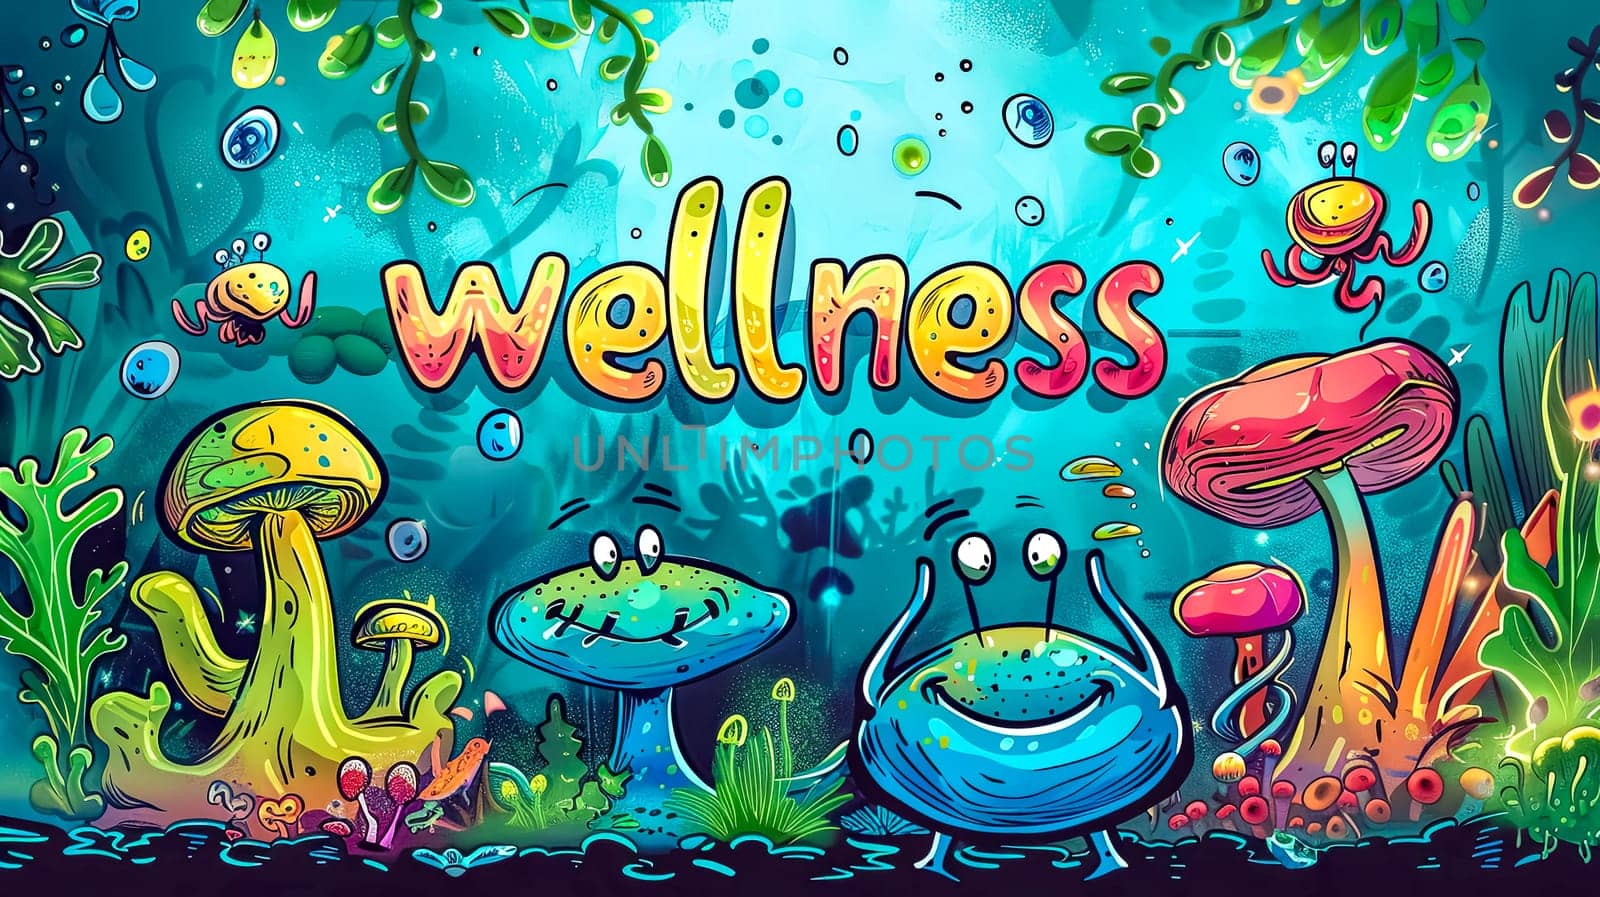 Colorful underwater wellness fantasy illustration by Edophoto